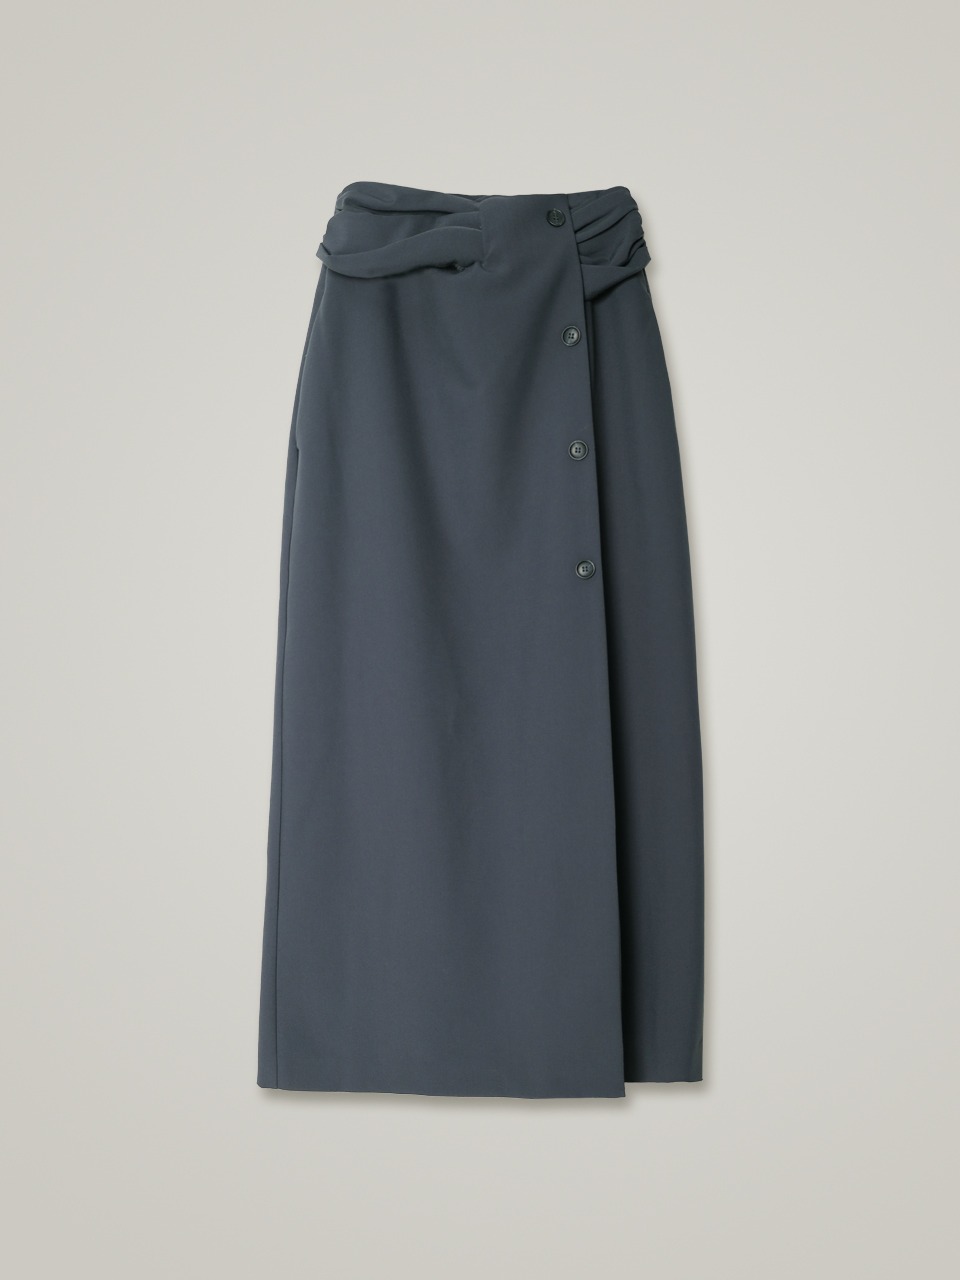 comos 908 wrap button shirring skirt (charcoal gray)